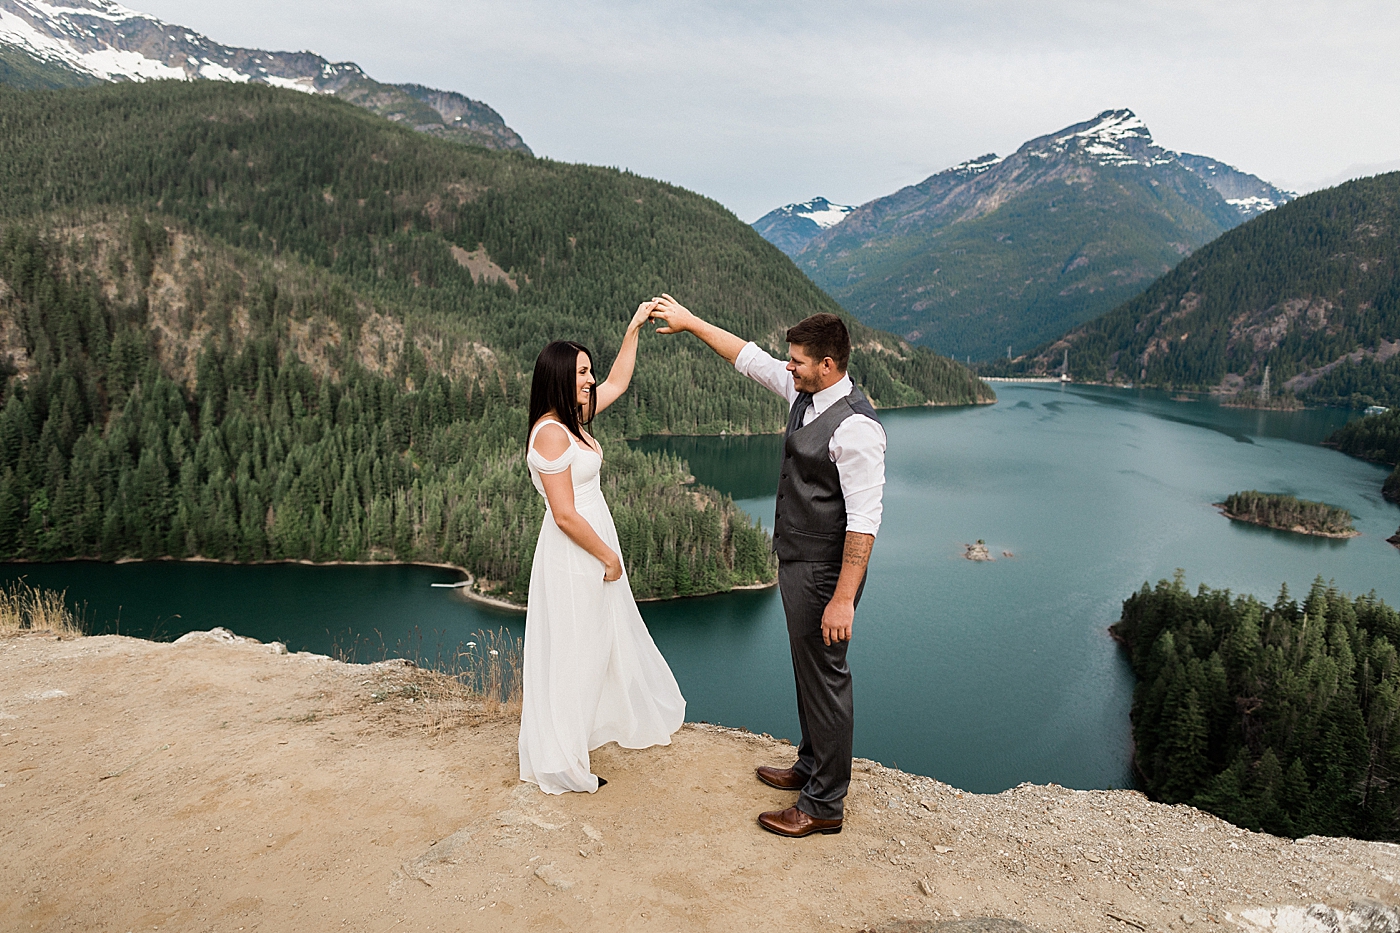 Couple dancing during engagement session overlooking Diablo Lake in Washington | Megan Montalvo Photography